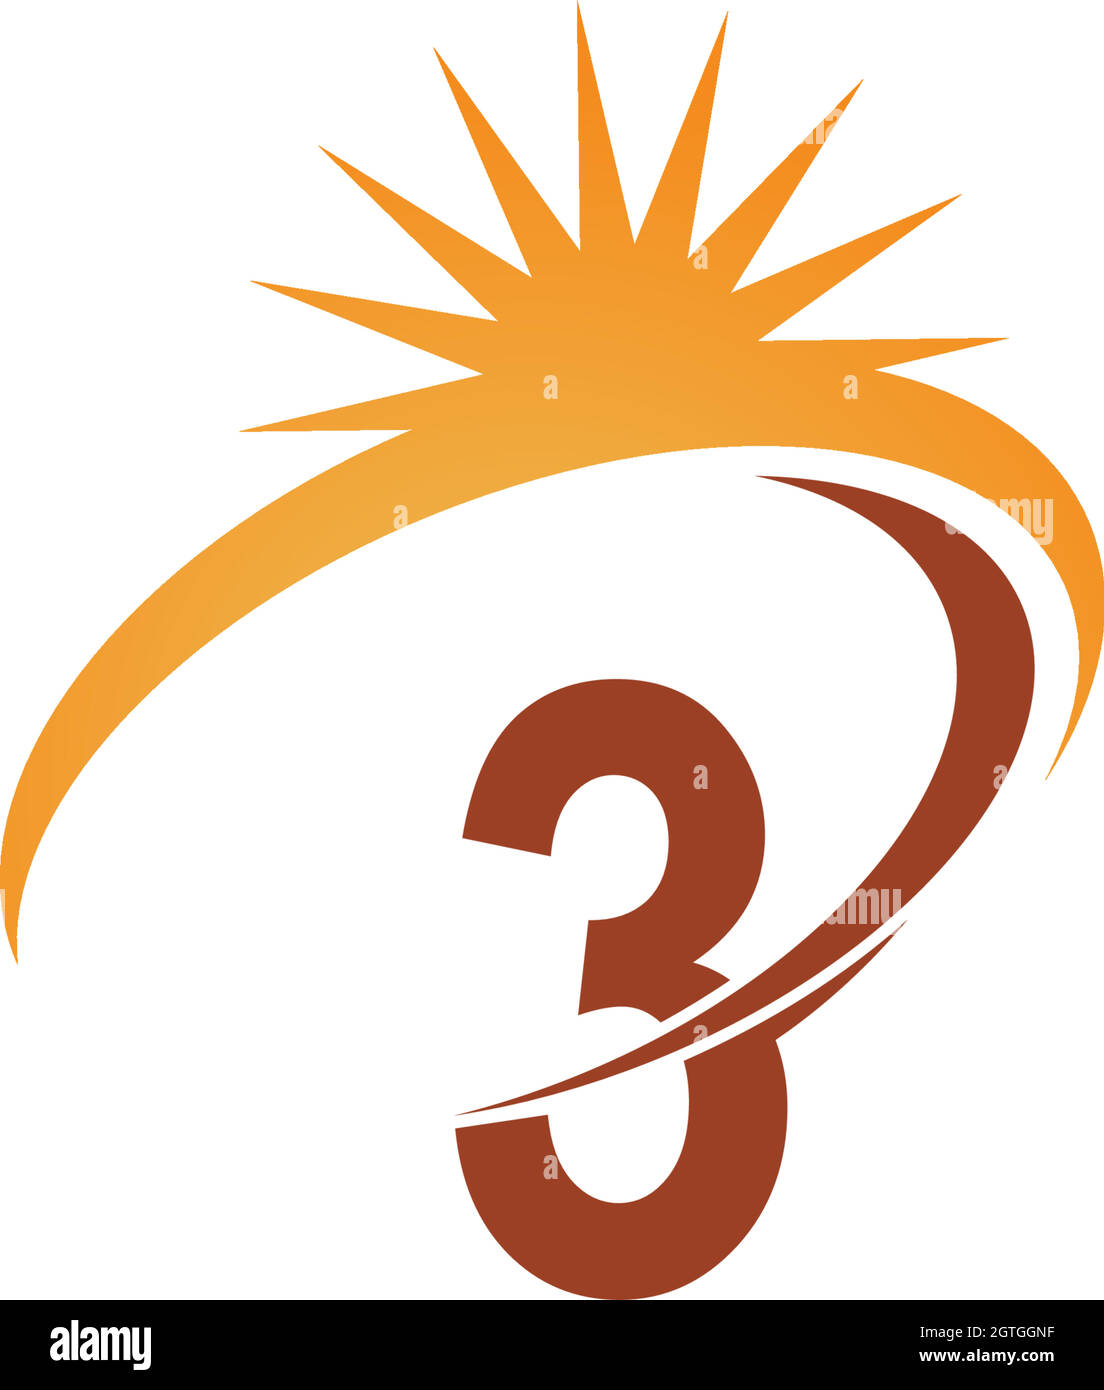 Nummer 3 mit Sun ray Icon Logo Design Vorlage Illustration Stock Vektor